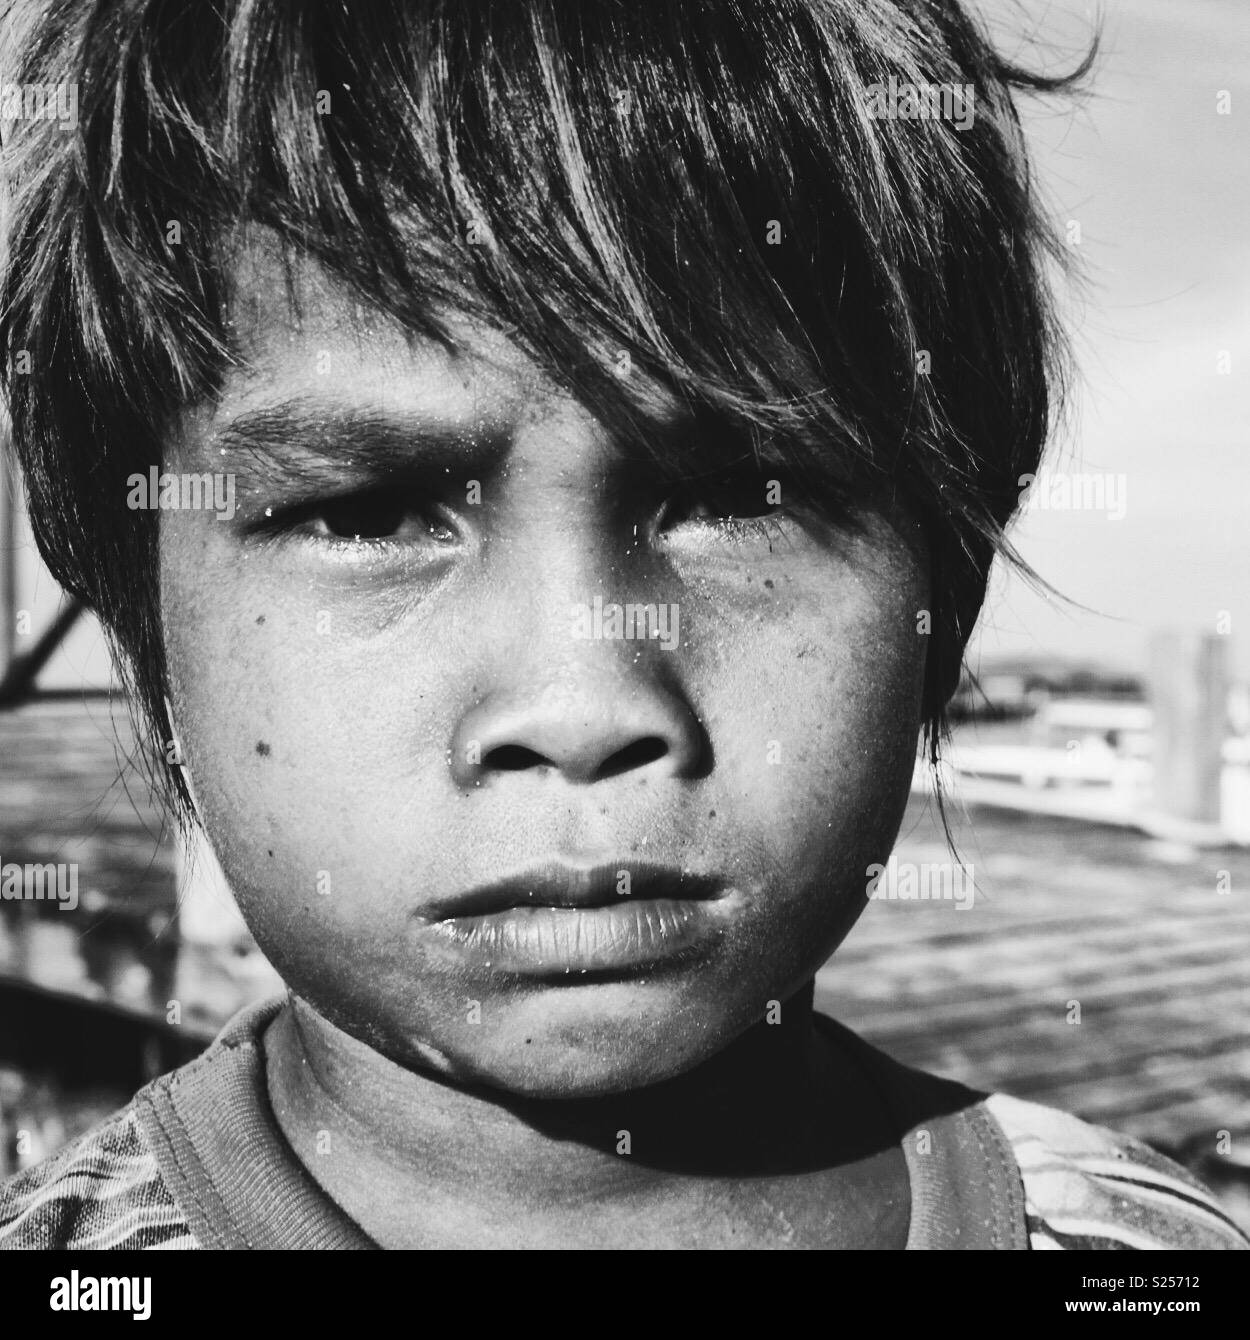 Seafarer kid portrait Stock Photo